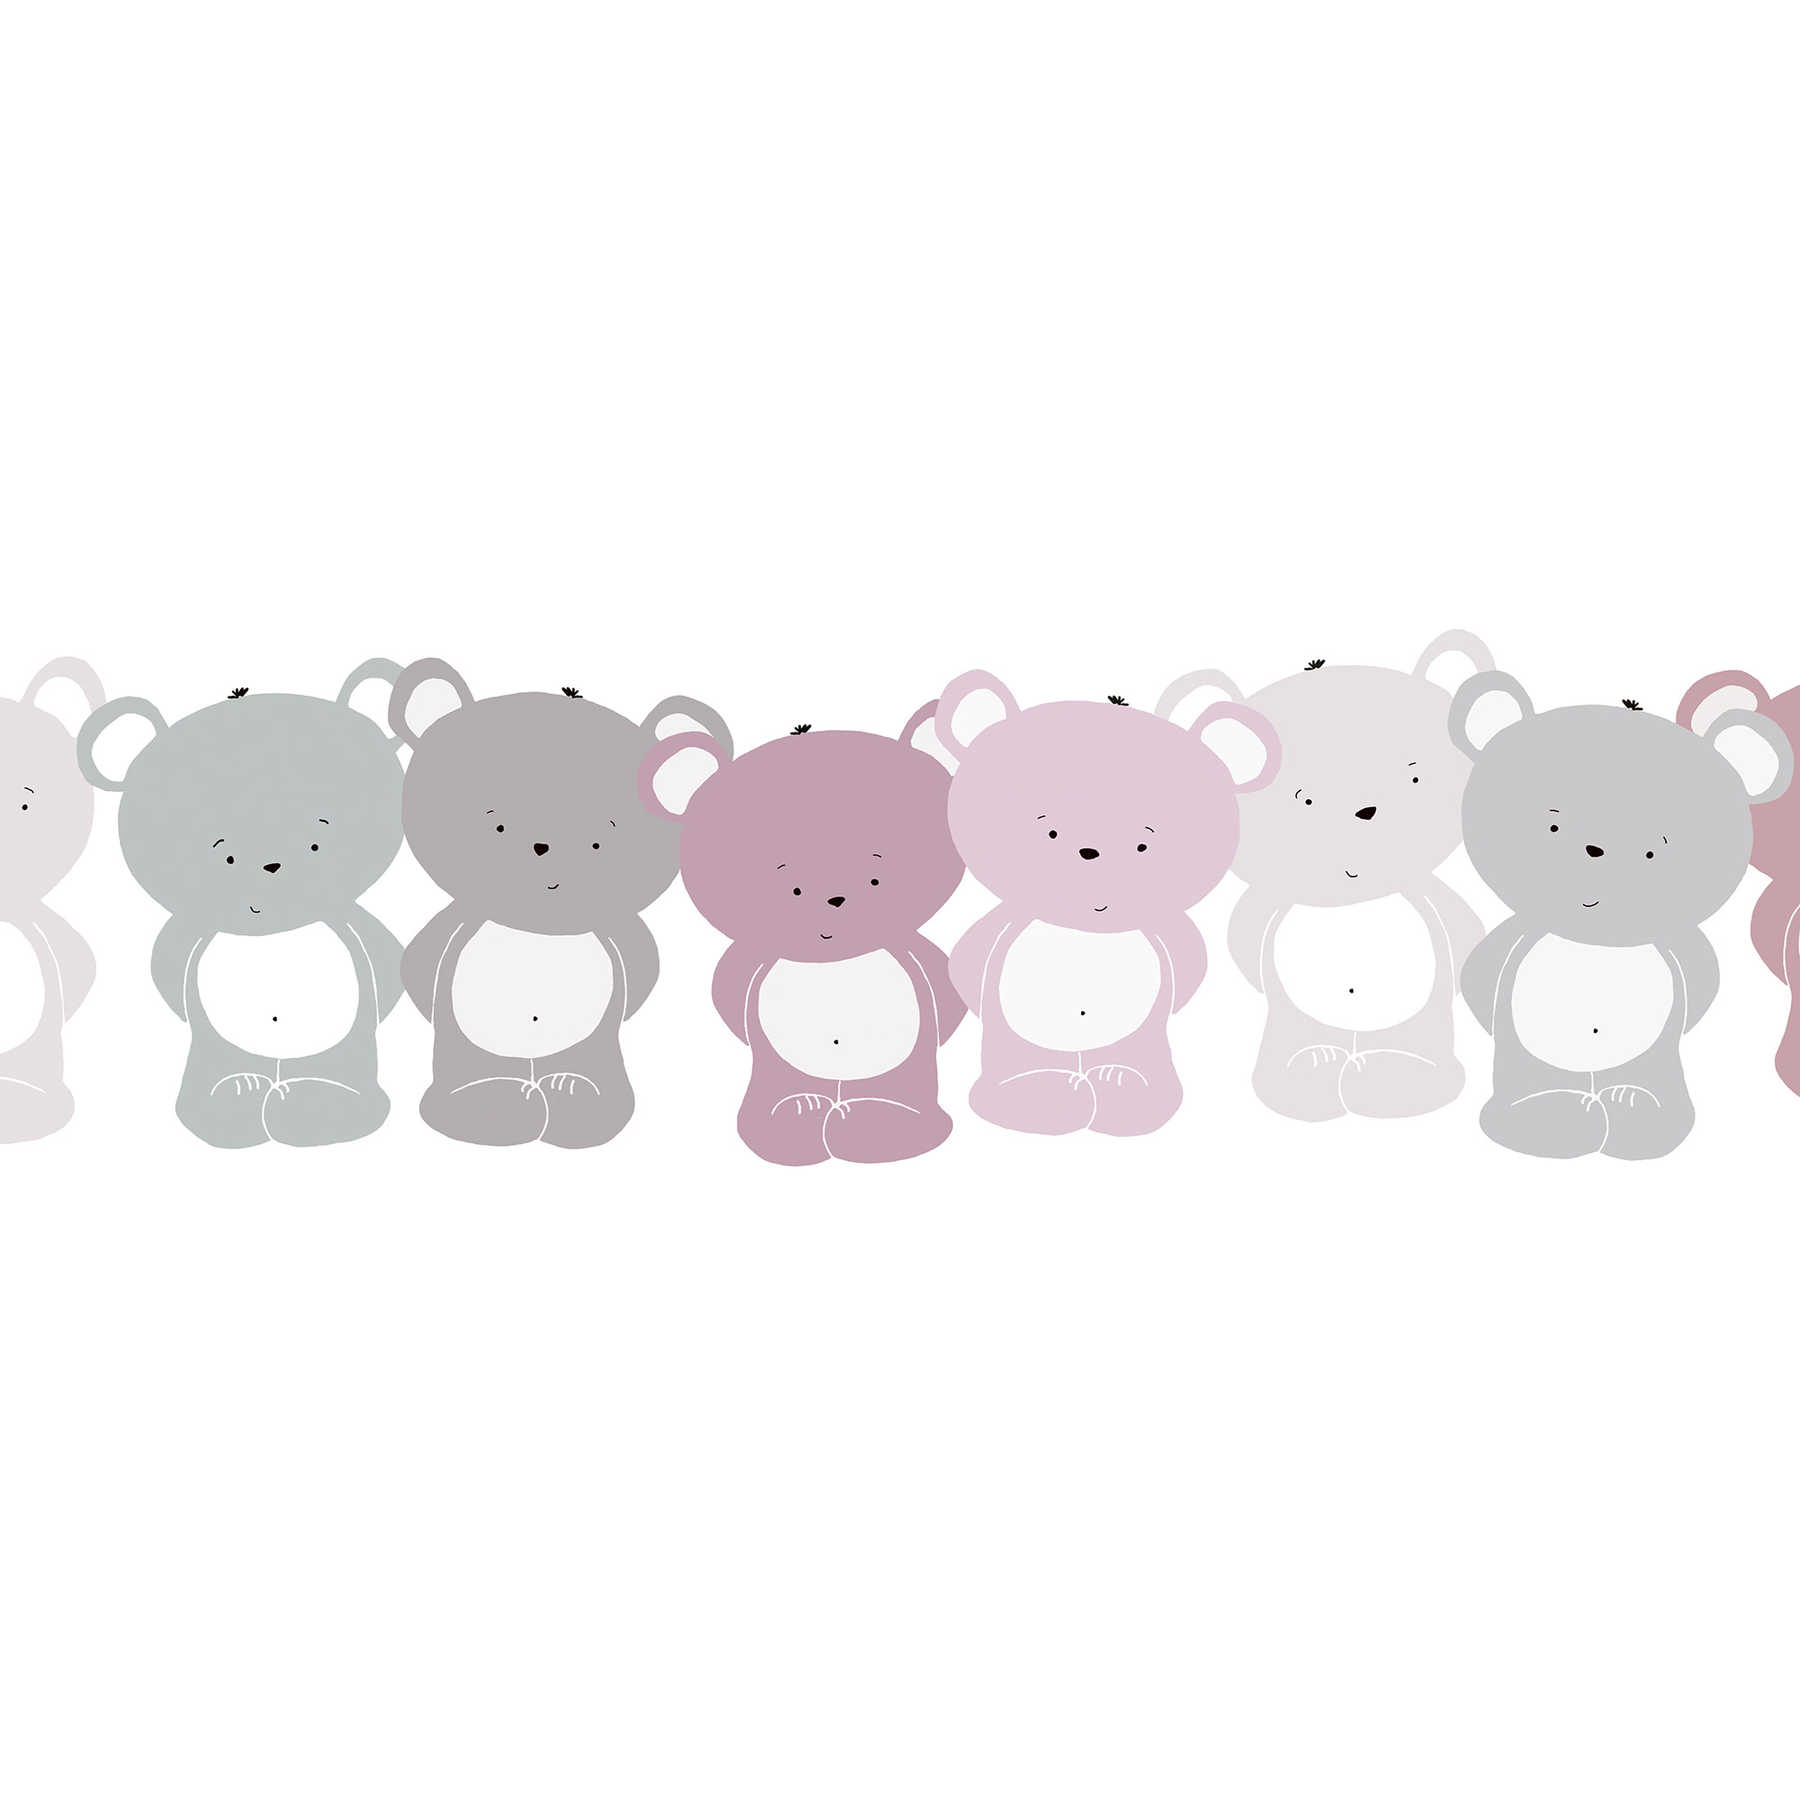 Nursery border "Adorable happy bears" for girls - pink, purple, grey
